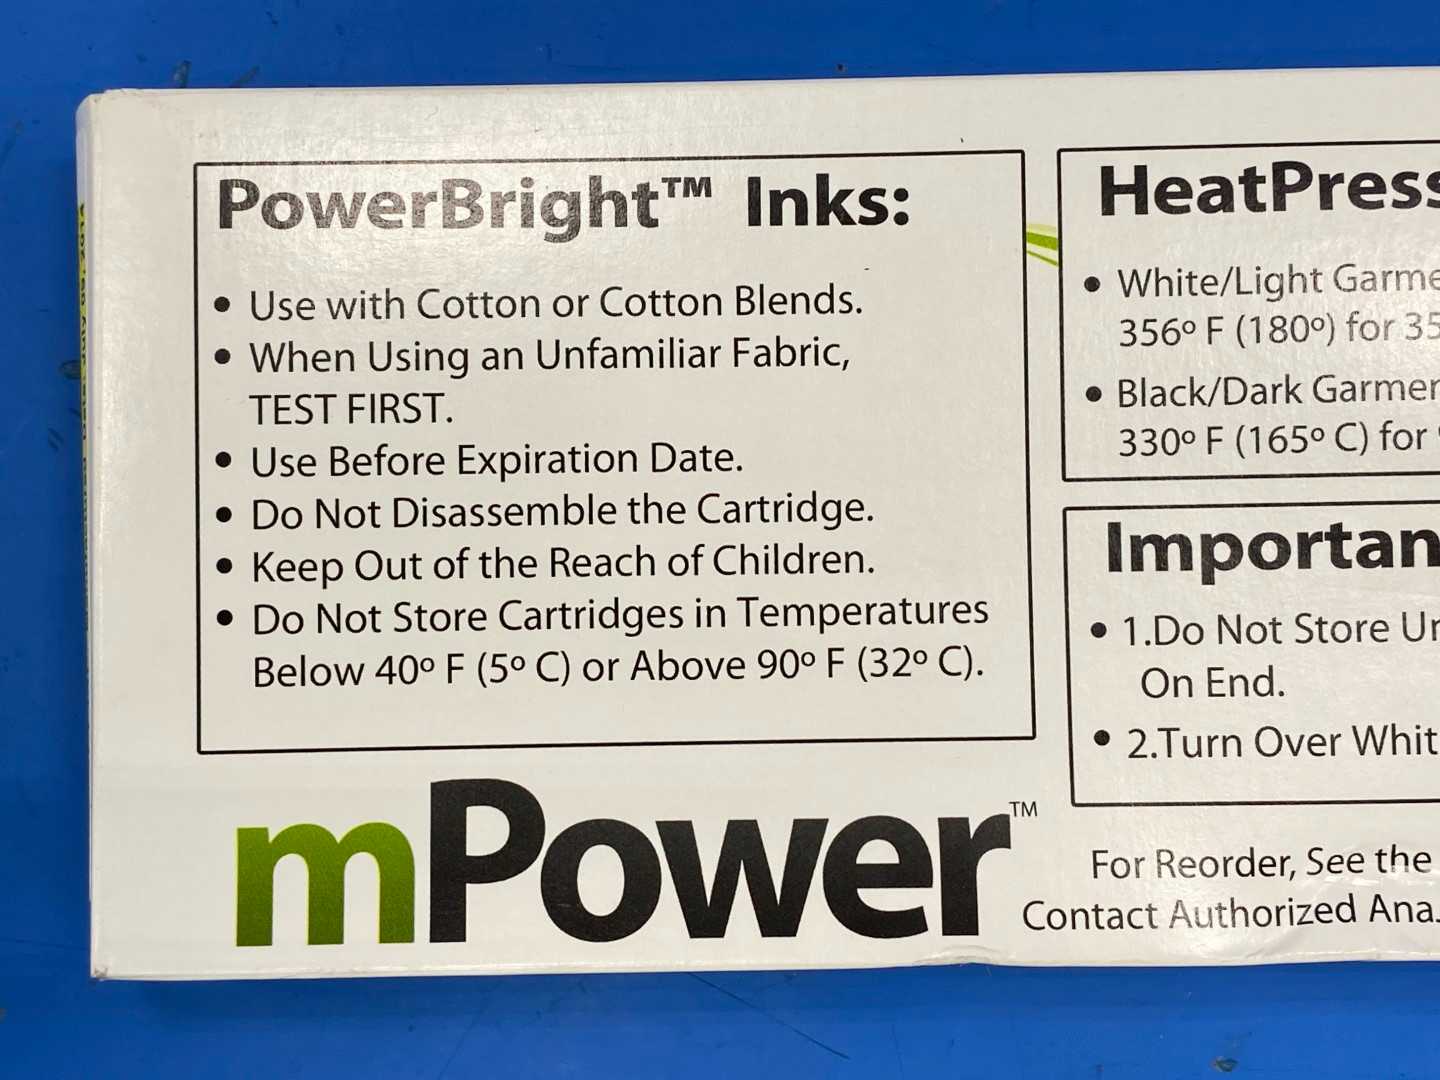 Anajet mPower Power Bright Ink mP-Black MPI-BK1 